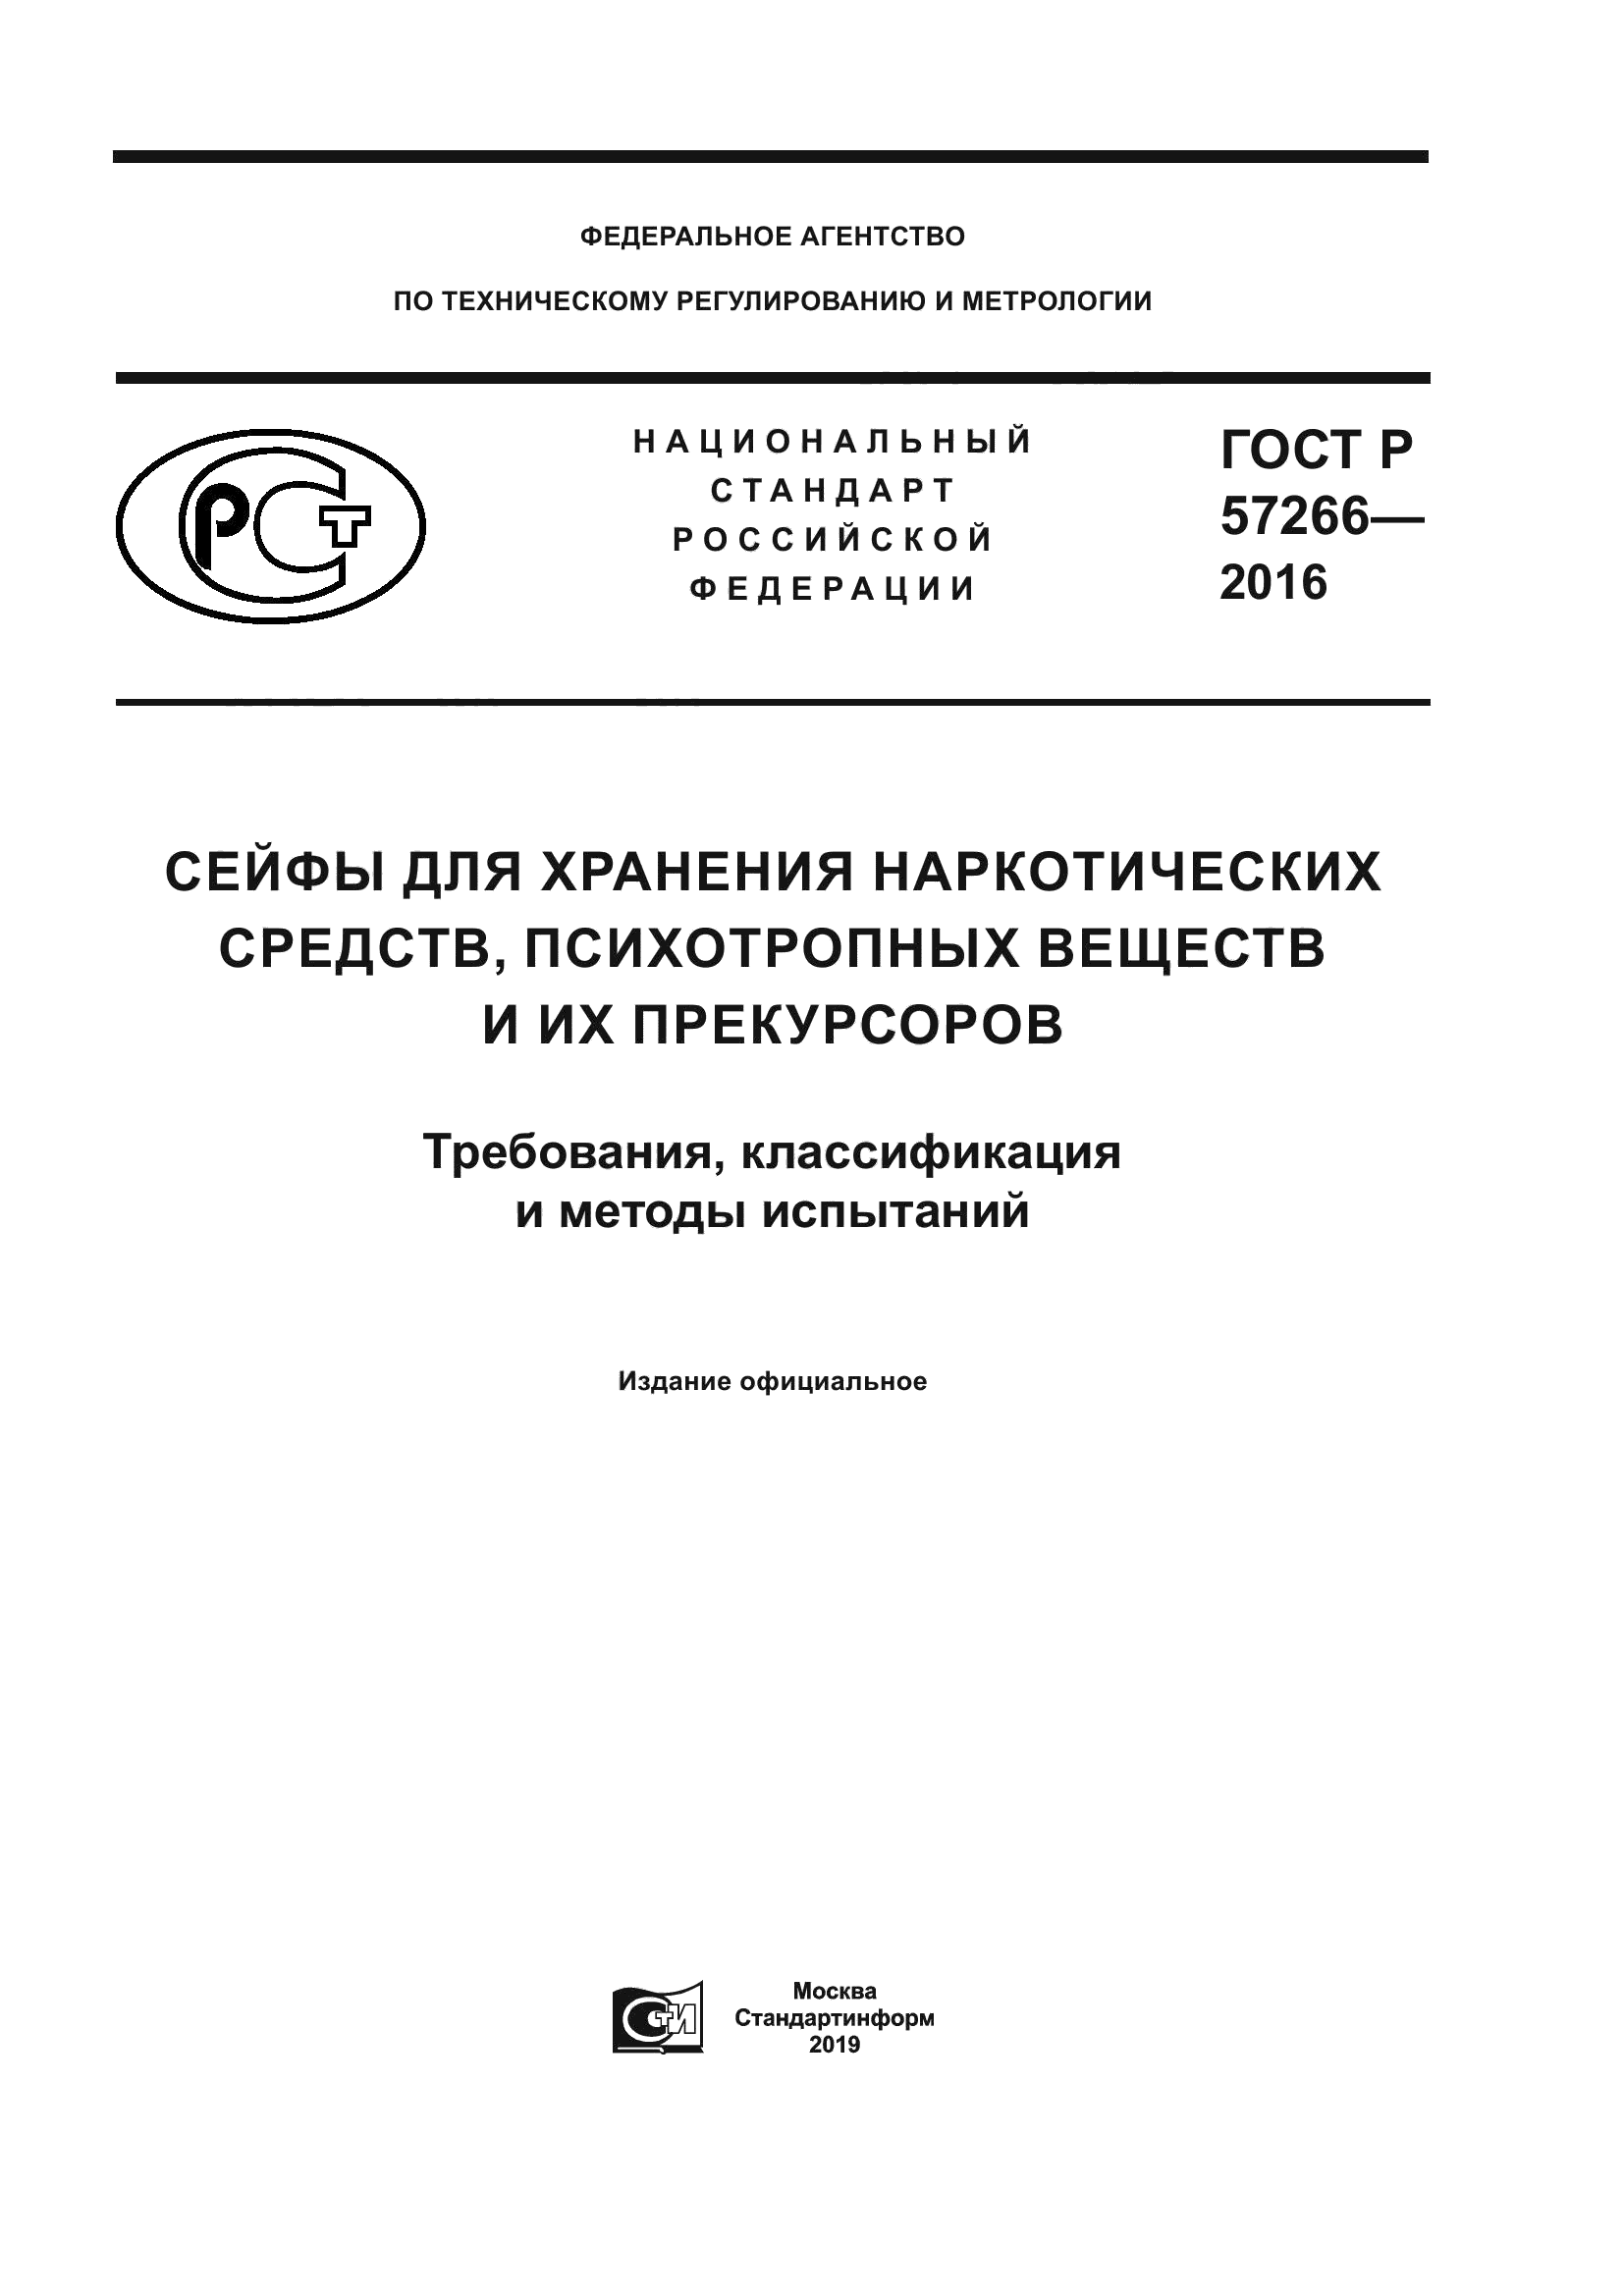 ГОСТ Р 57266-2016